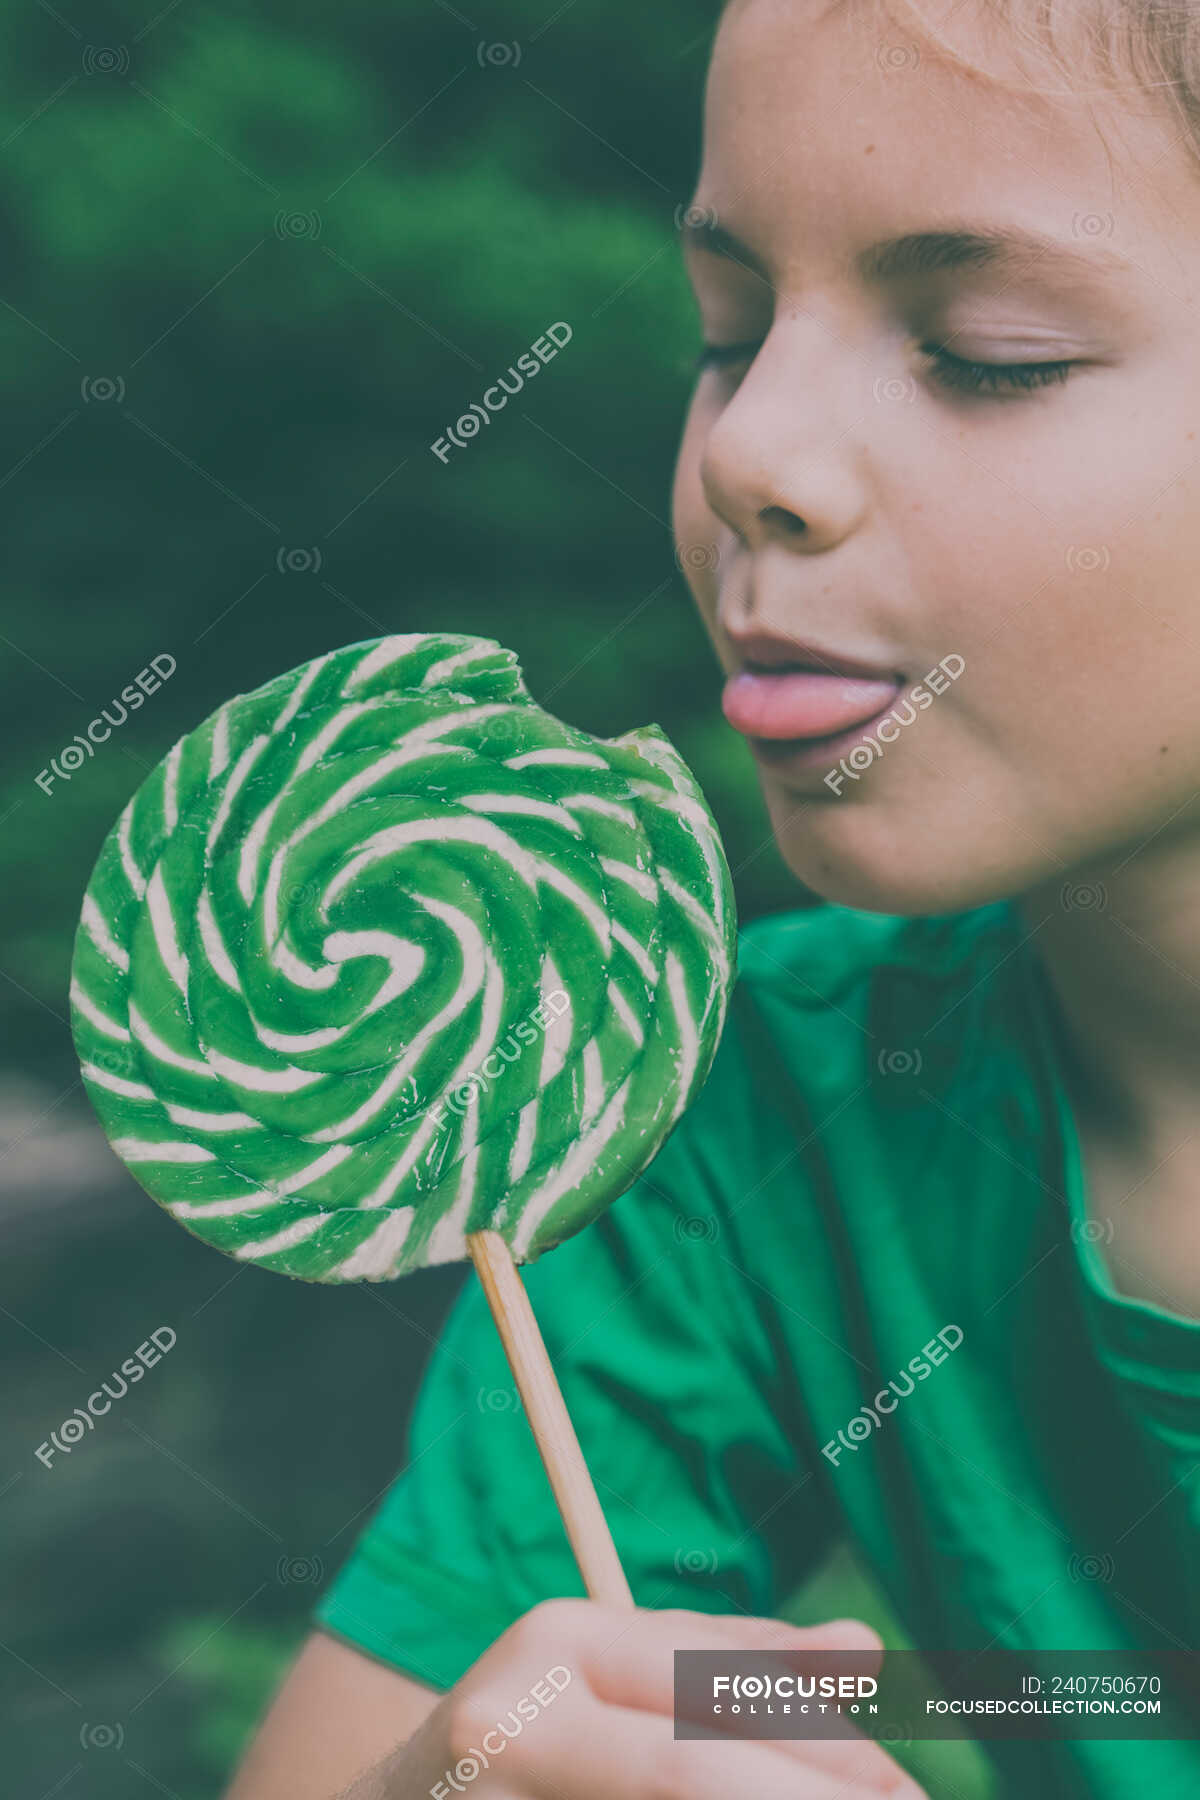 Focused 240750670 Stock Photo Adorable Boy Eating Lollipop Nature 